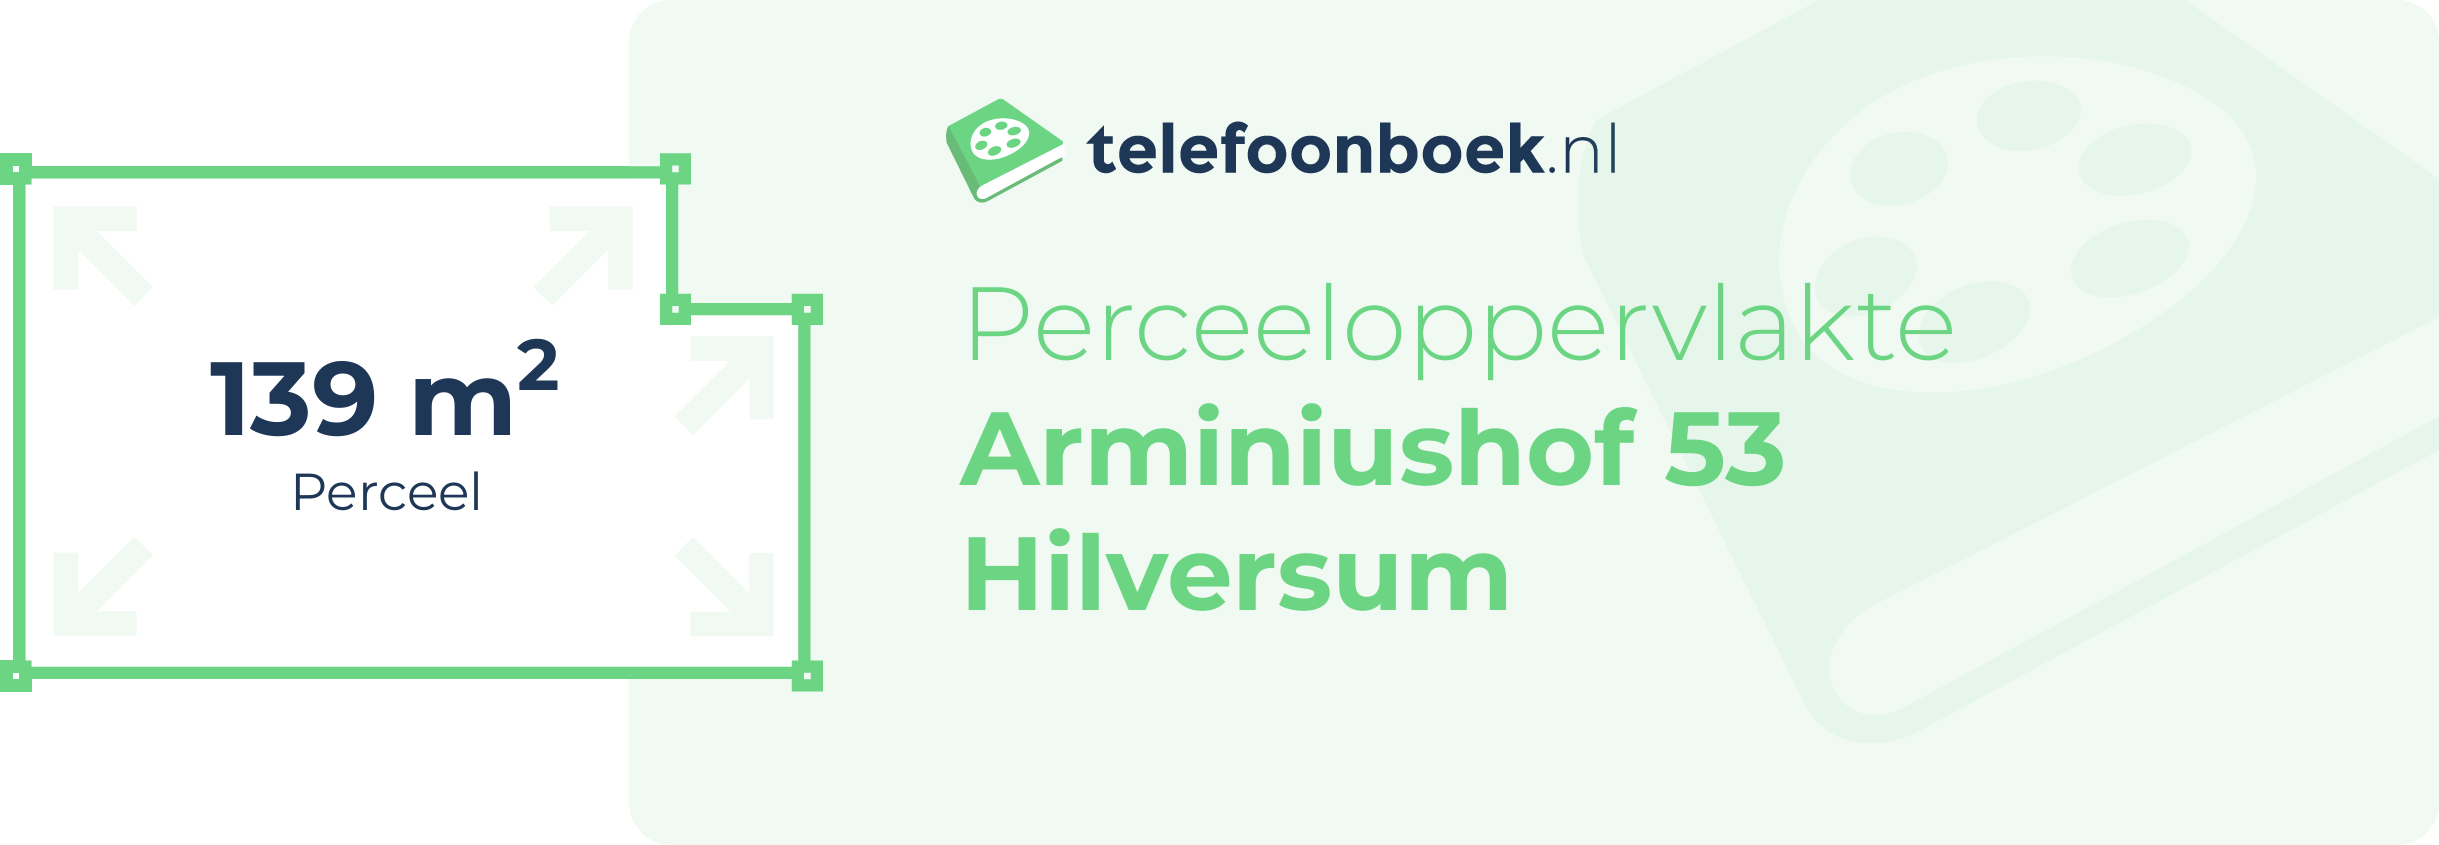 Perceeloppervlakte Arminiushof 53 Hilversum